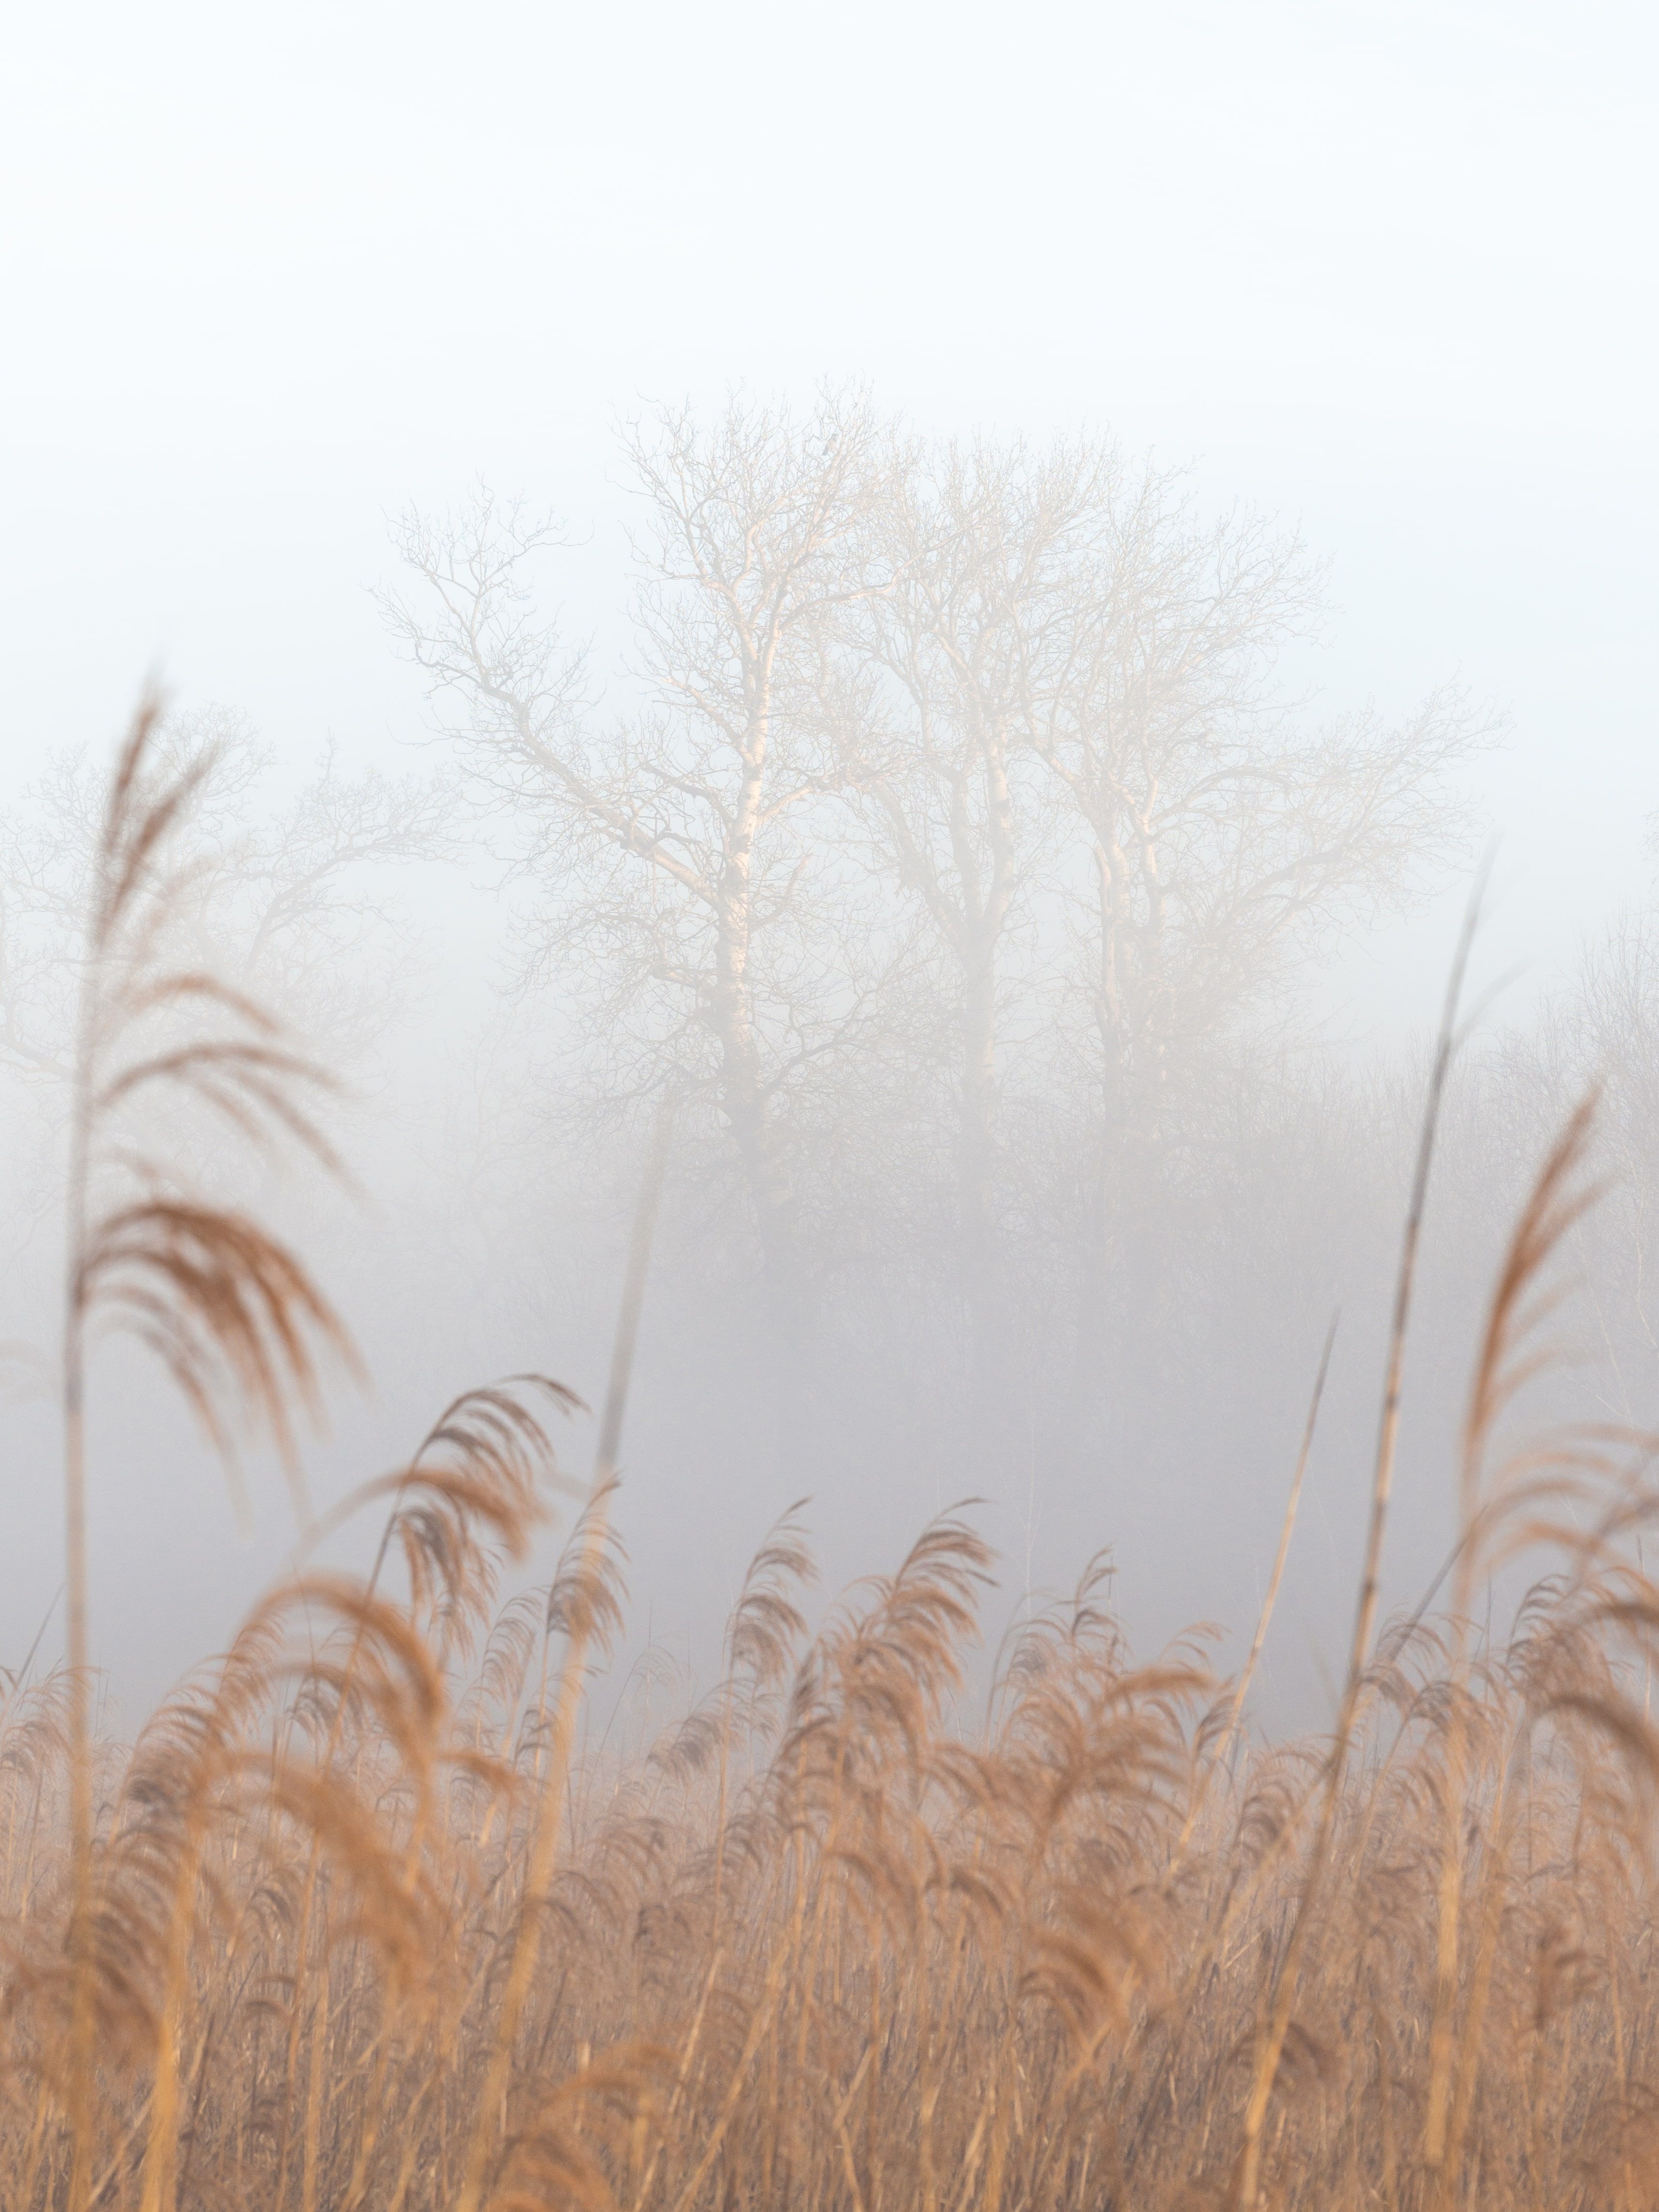 Misty Reeds